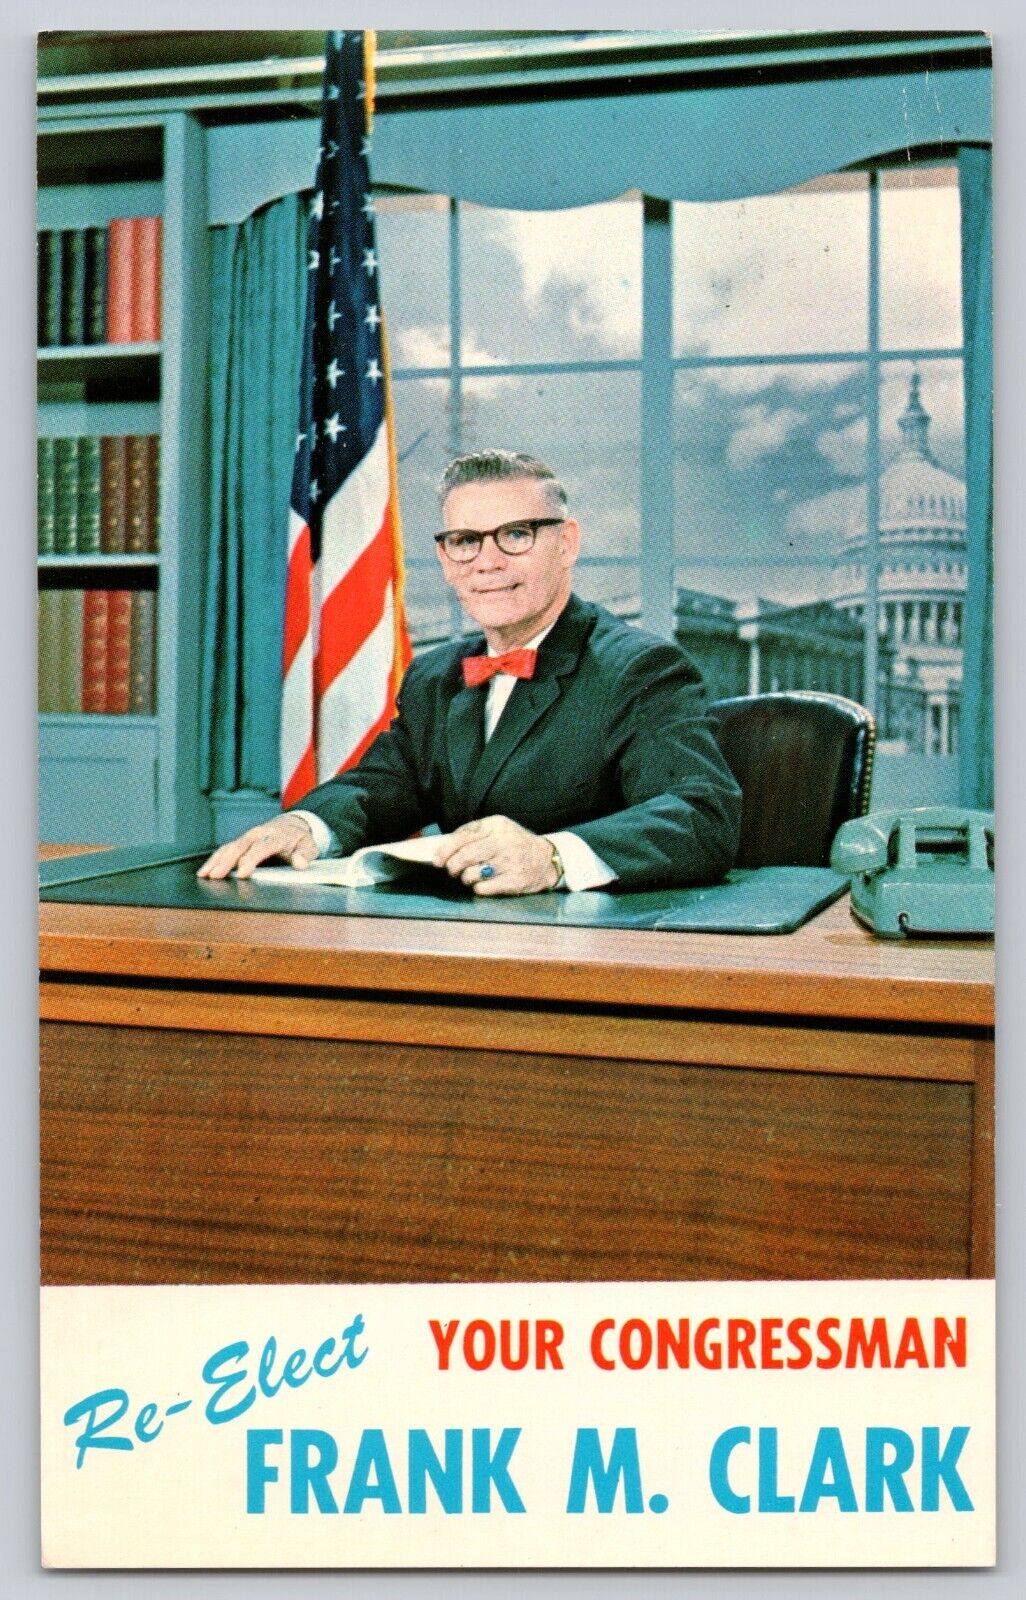 Postcard Pennsylvania Ambridge Re - Elect Your Congressman Frank M. Clark